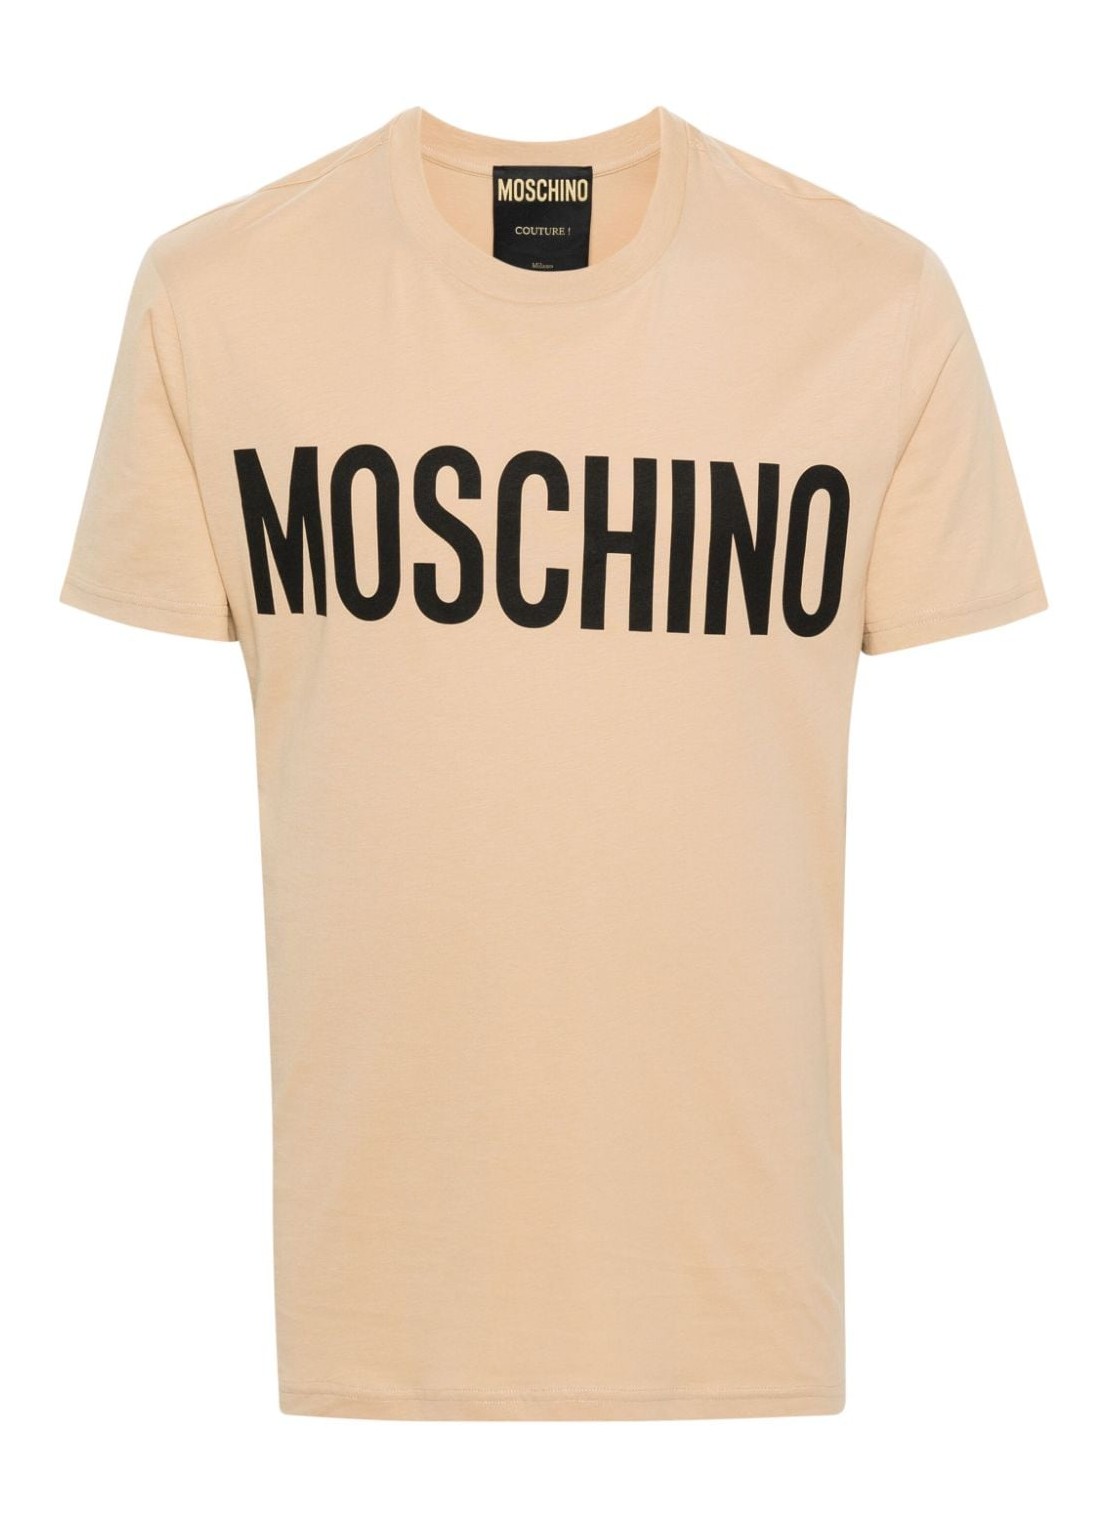 Camiseta moschino couture t-shirt man organic cotton jersey 07012041 a1148 talla 50
 